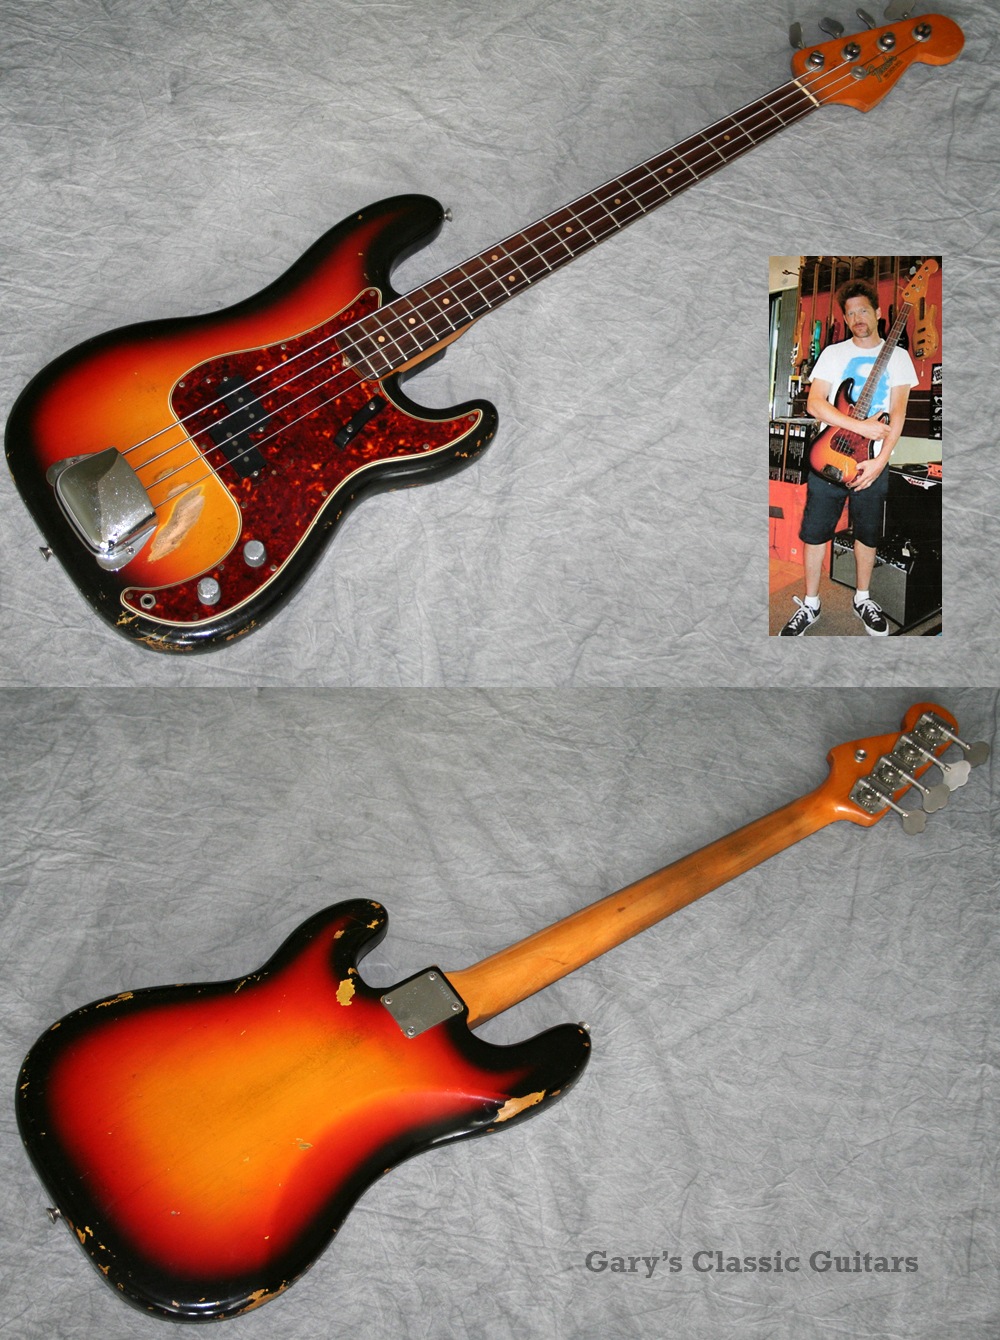 1965 Fender Precision Bass Feb0259 Garys Classic Guitars And Vintage